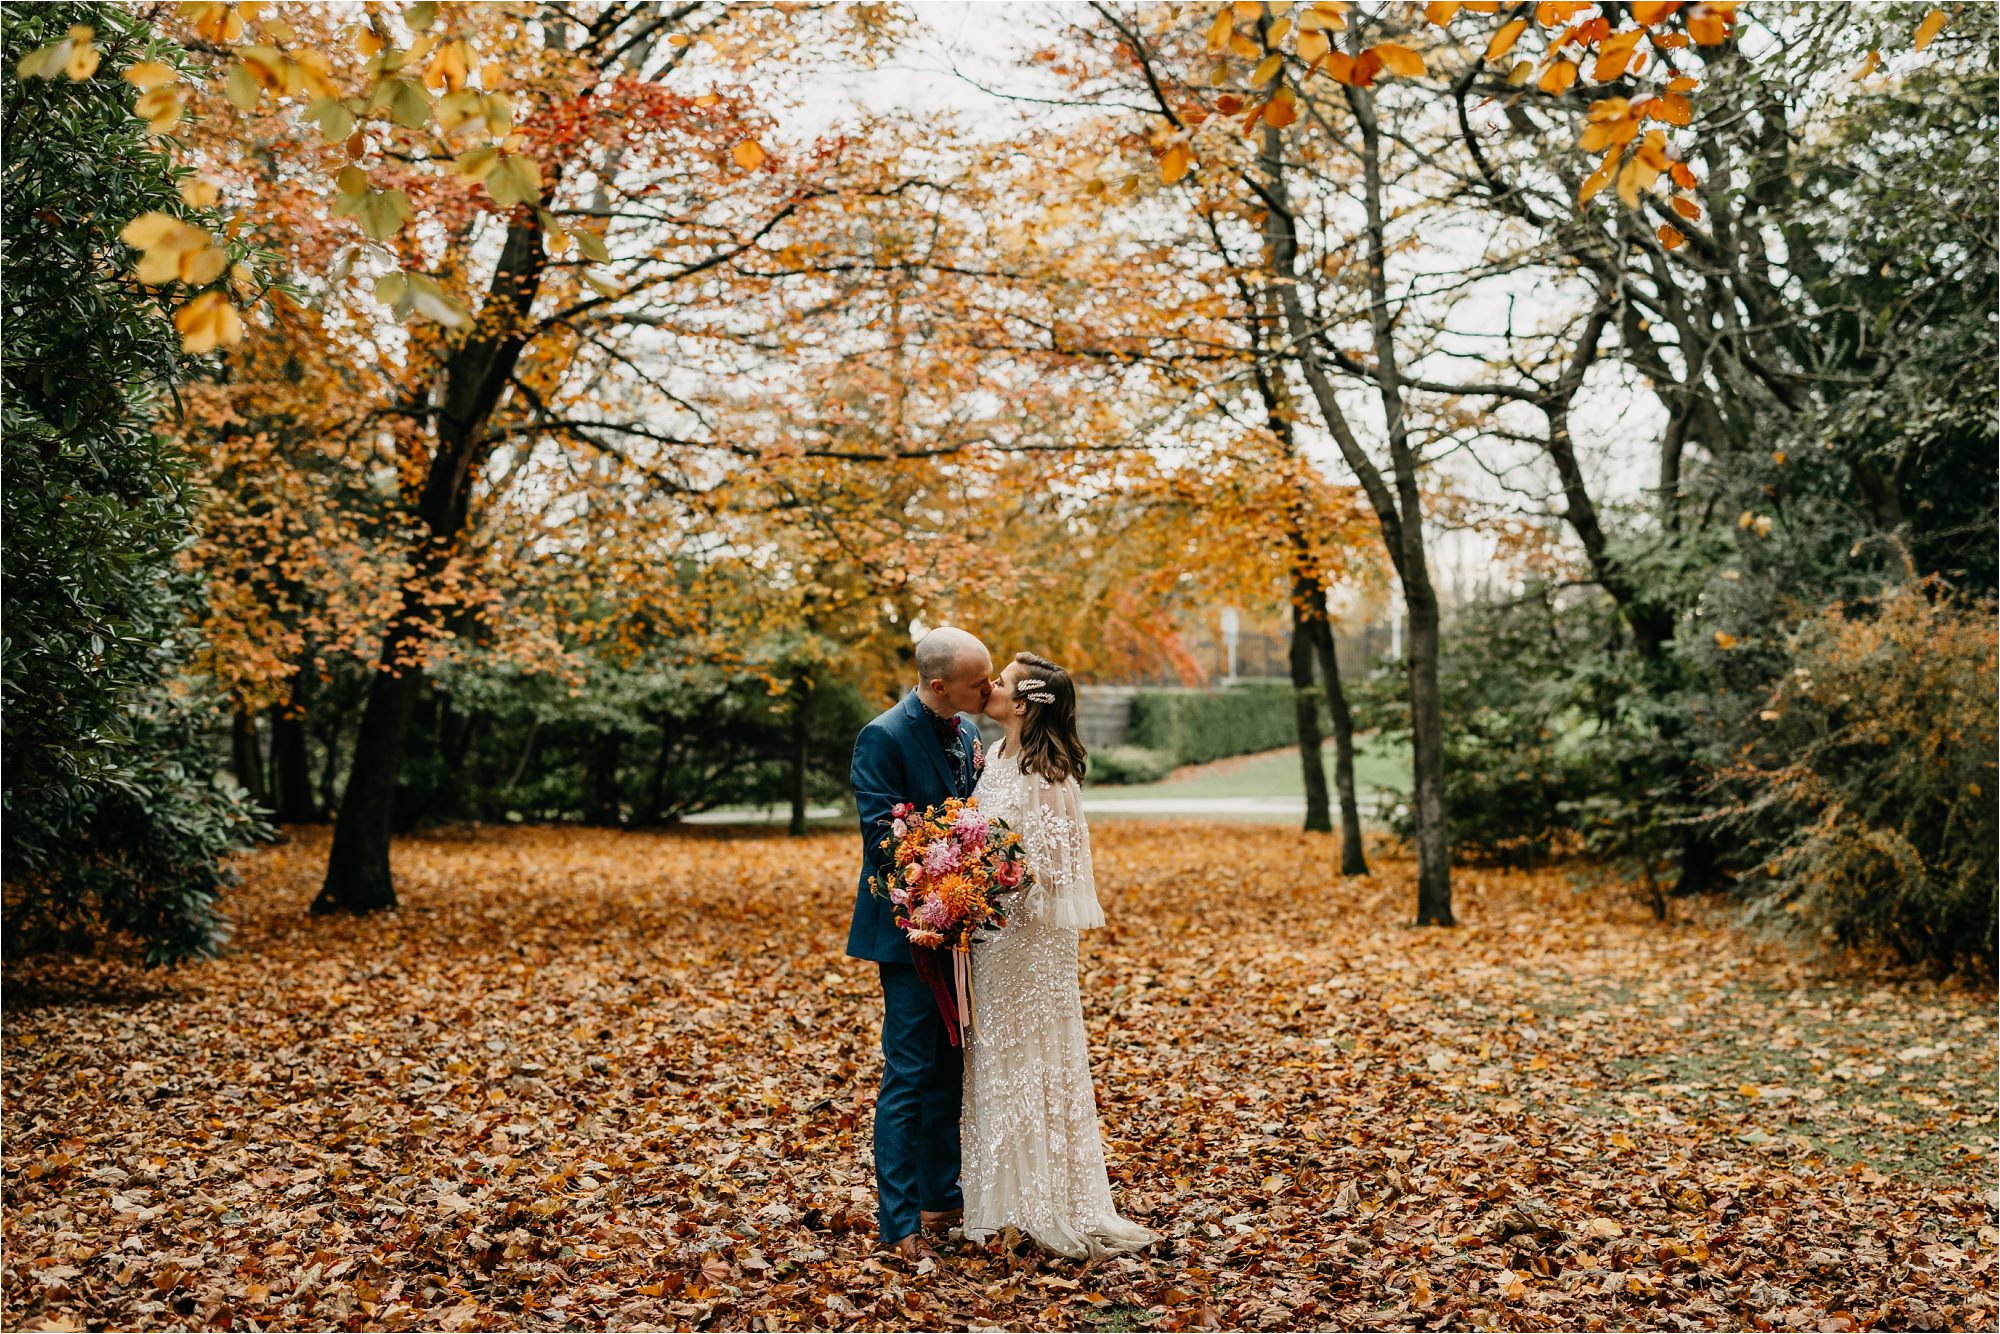 Duthie Park aberdeen micro wedding bride groom portrait in autumn winter leaves colourful